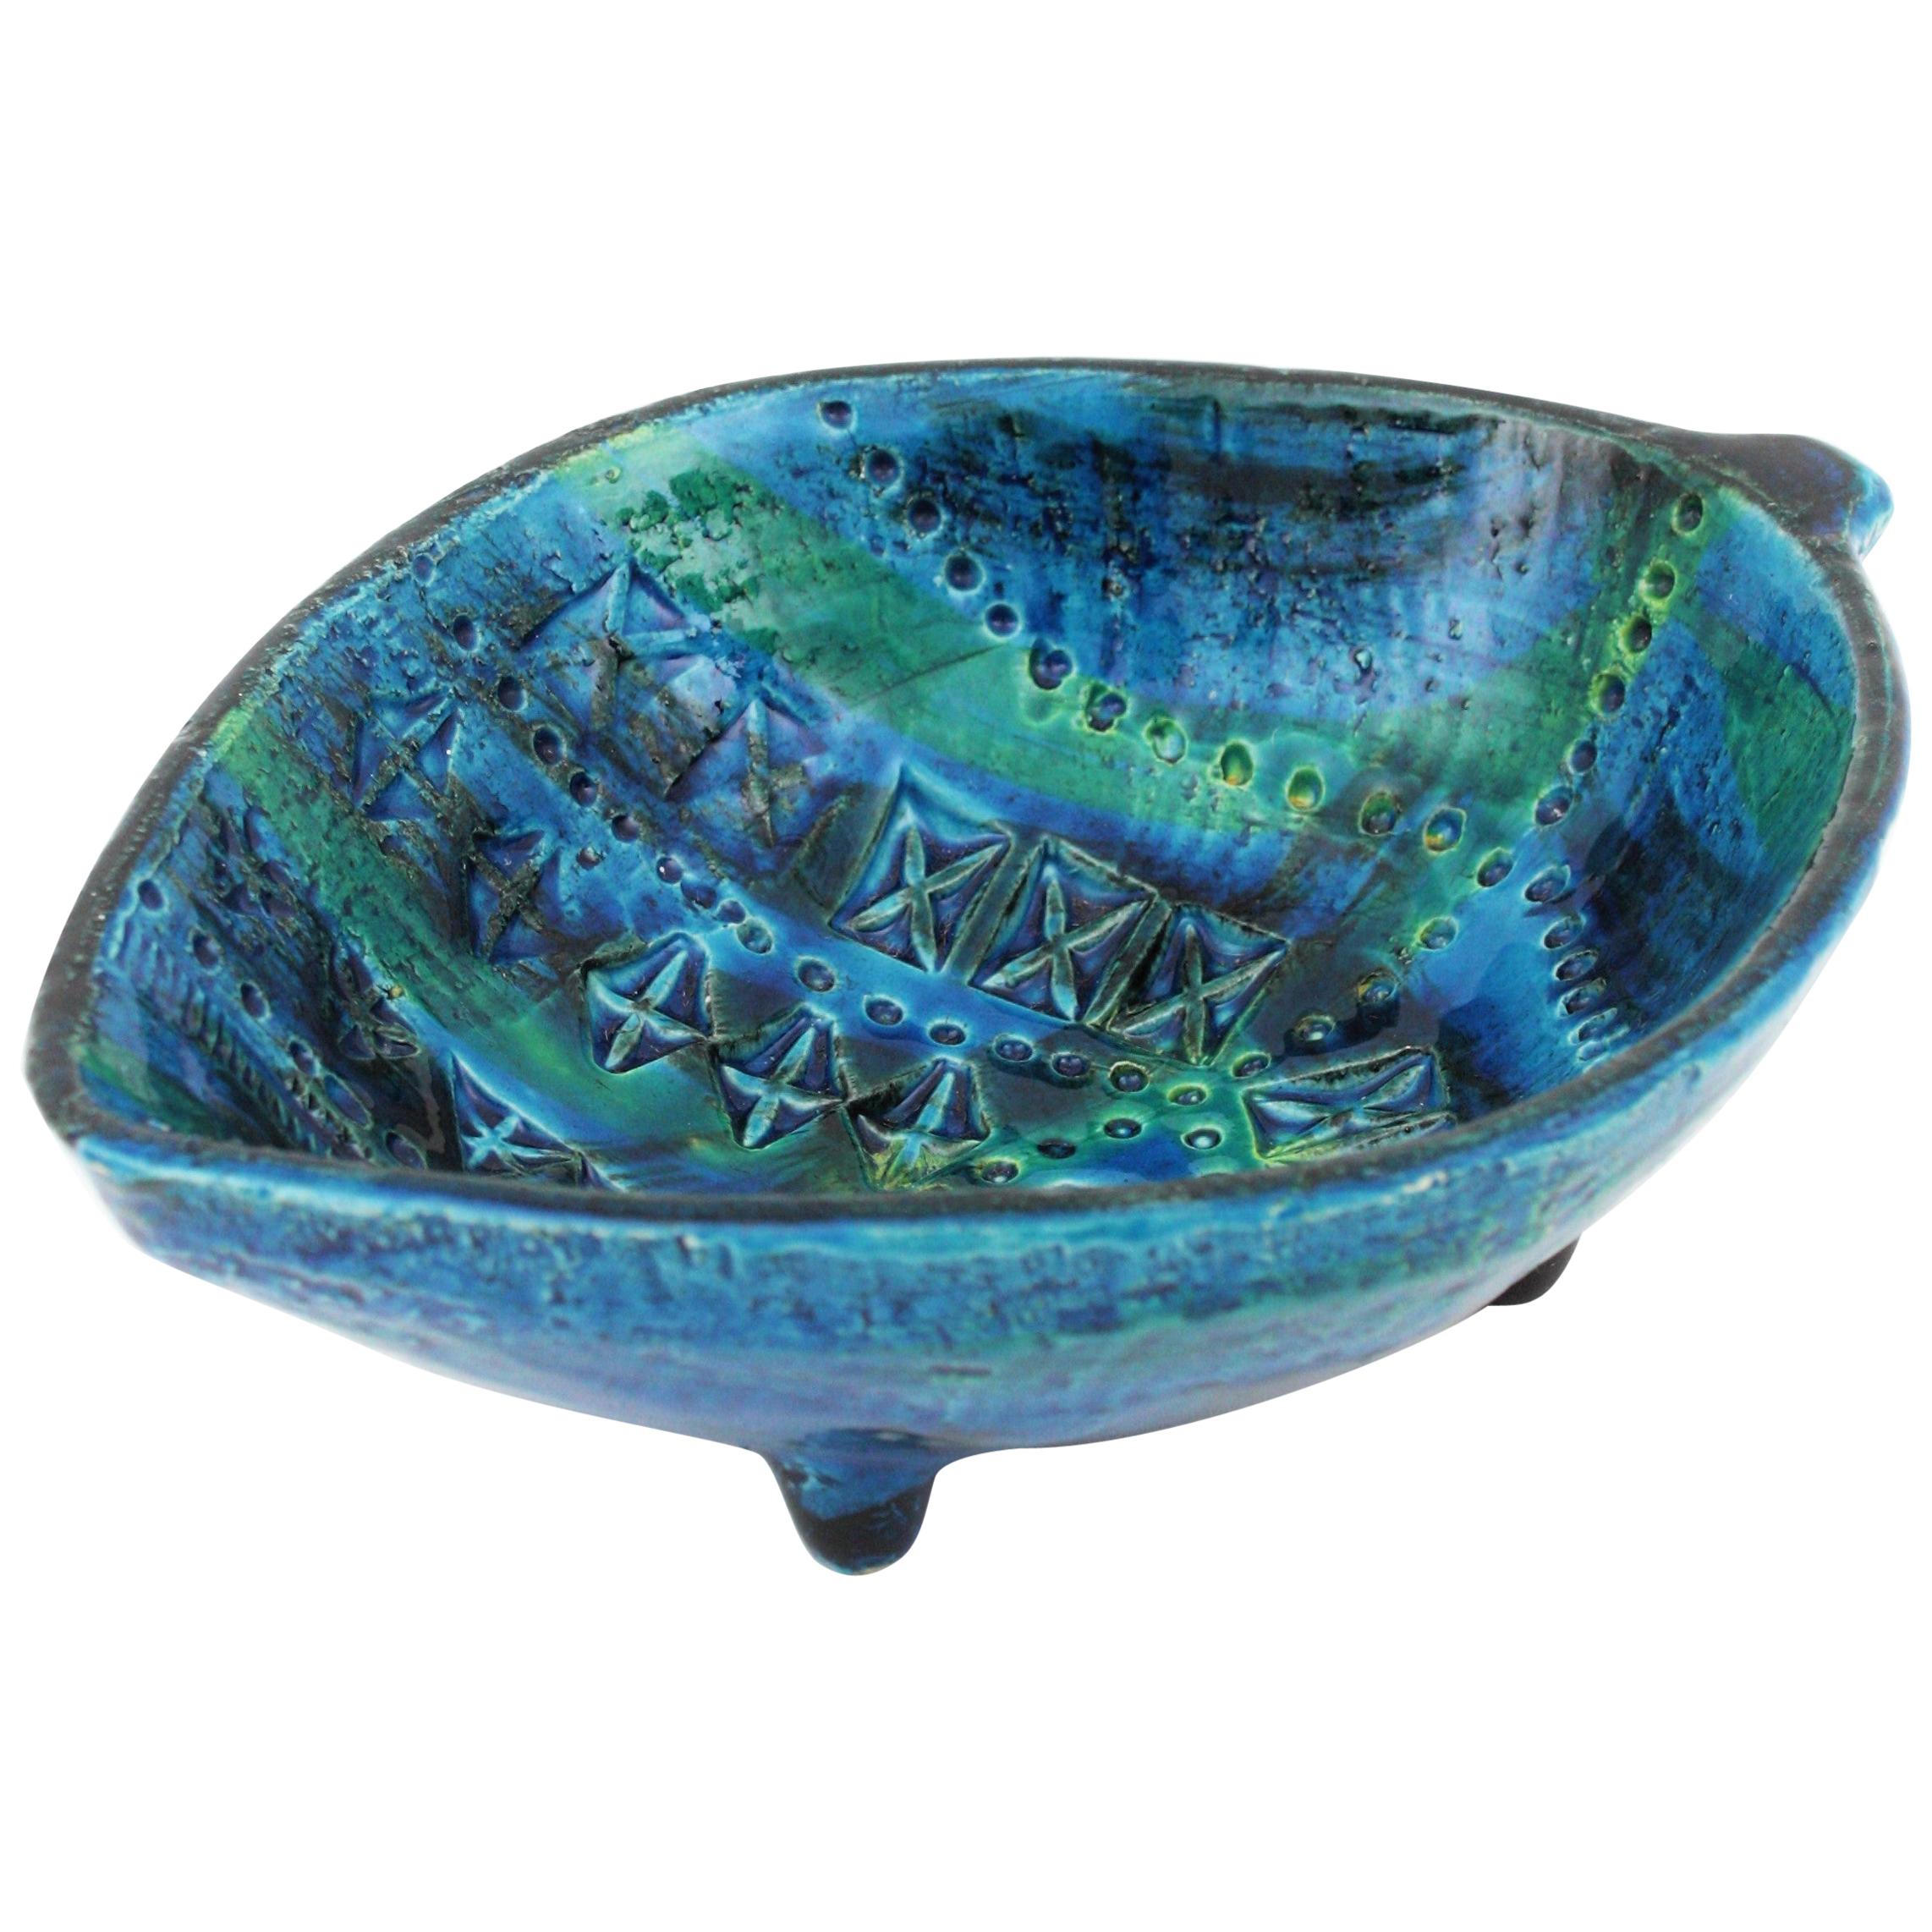 Aldo Londi for Bitossi Rimini Blu Leaf Shaped Glazed Ceramic Bowl / Ashtray